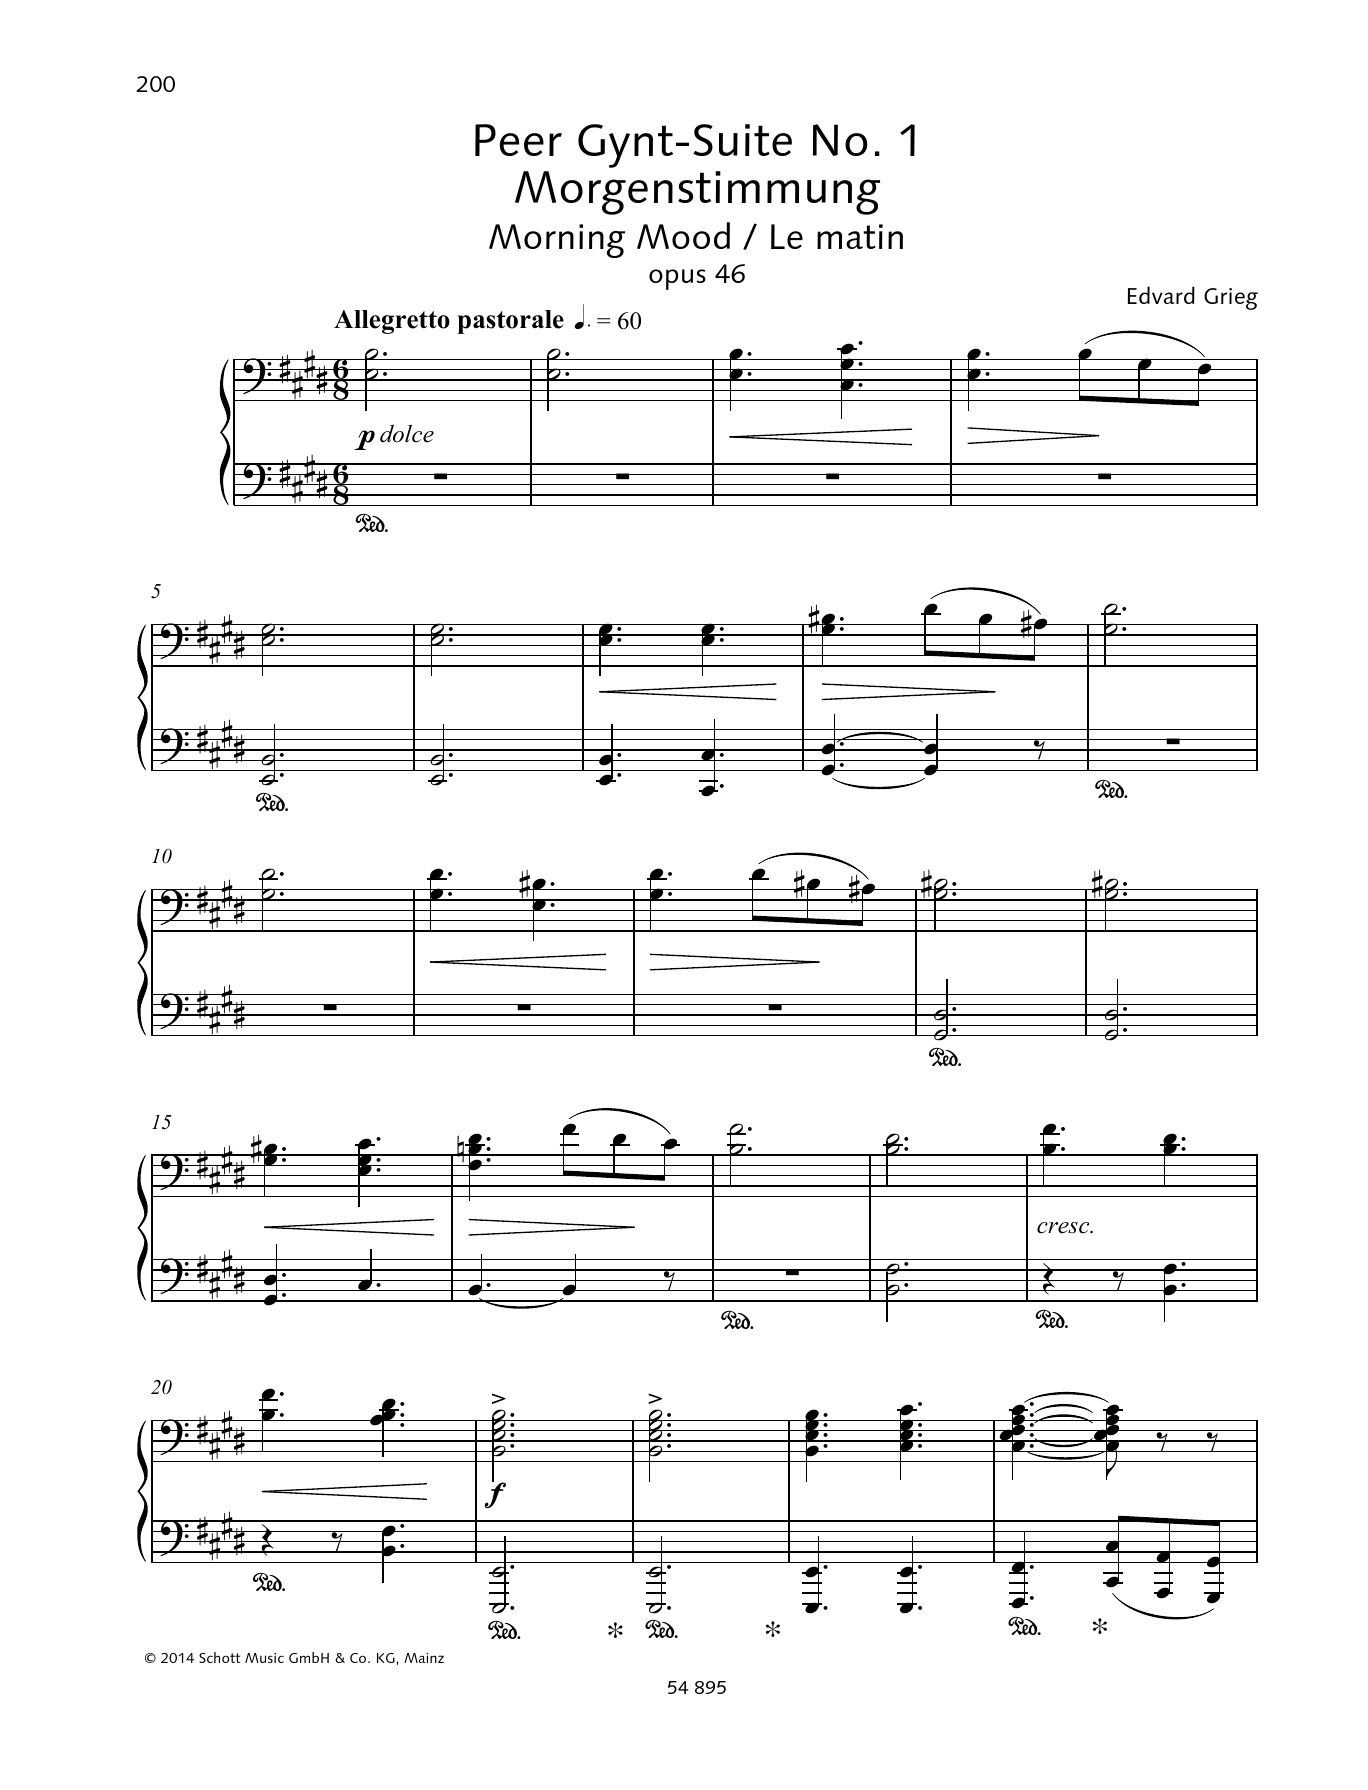 Download Edvard Grieg Peer-Gynt-Suite No. 1 Sheet Music